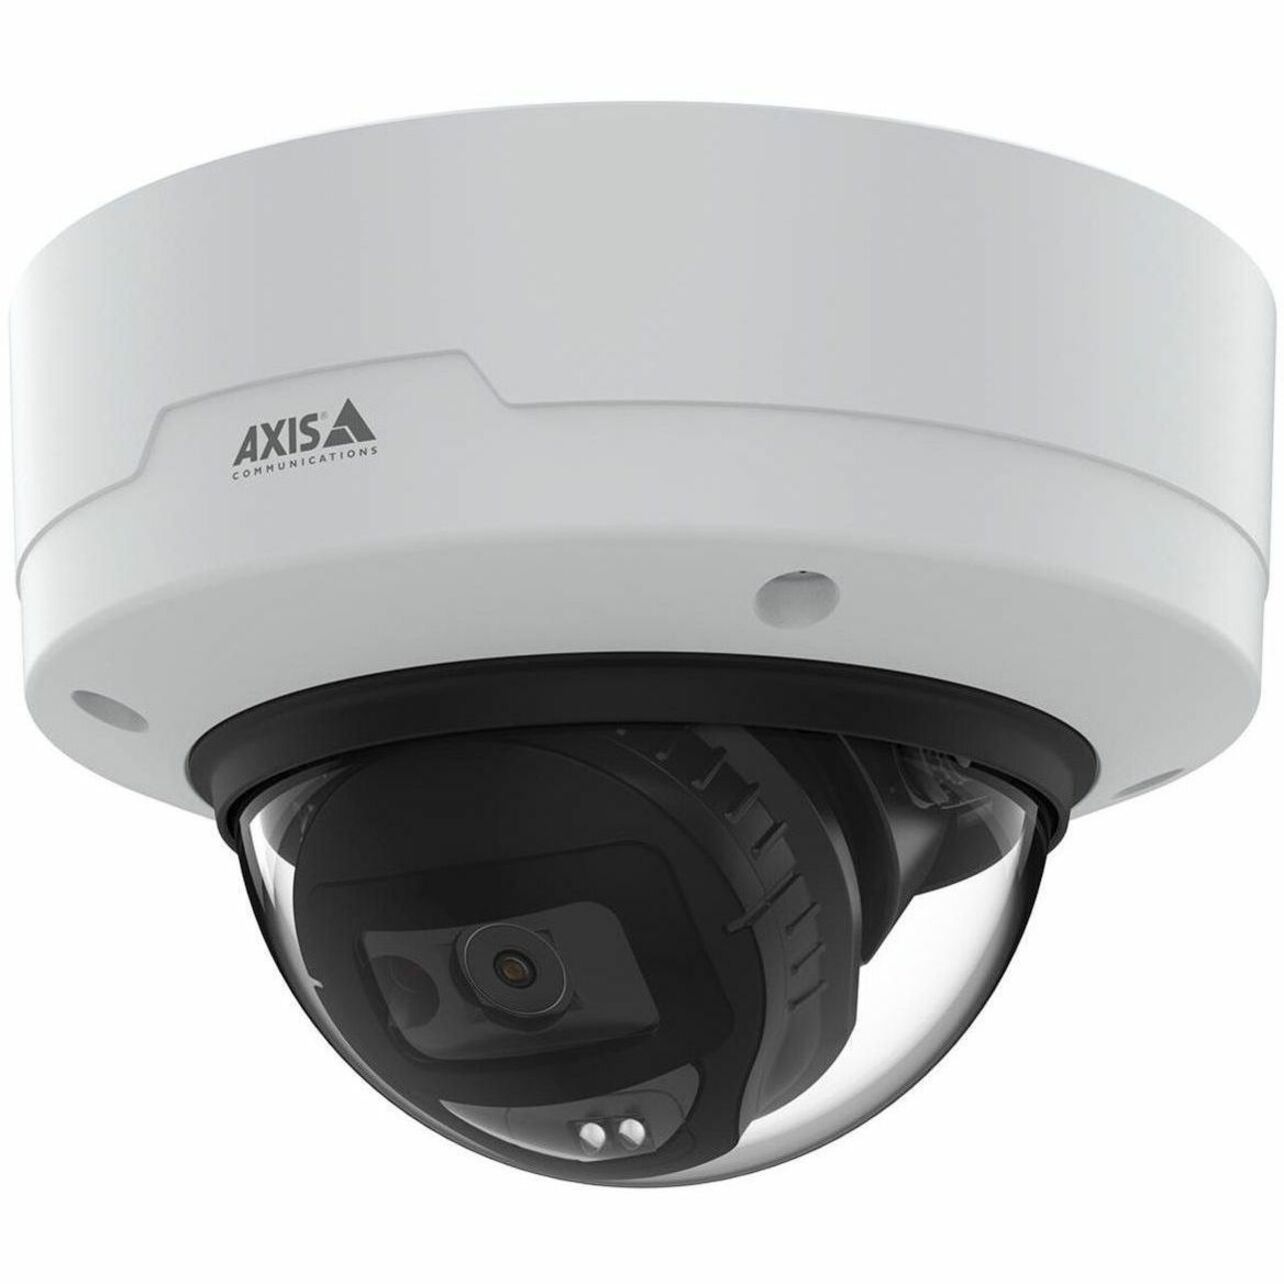 AXIS 02371-001 M3215-Lve Surveillance Camera, Color Dome